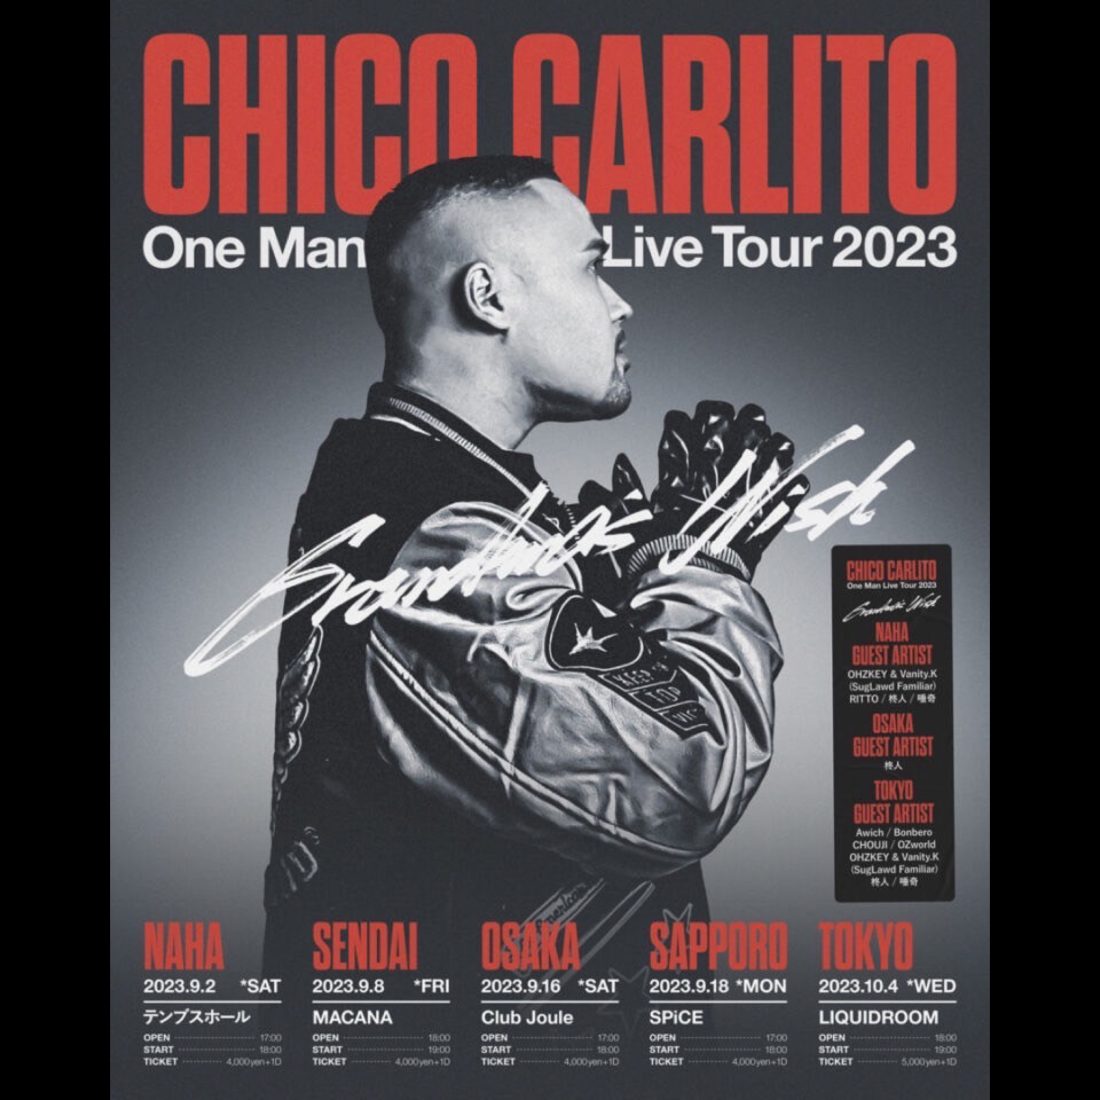 CHICO CARLITO One Man Live Tour2023 ”Grandma's Wish”OSAKA 